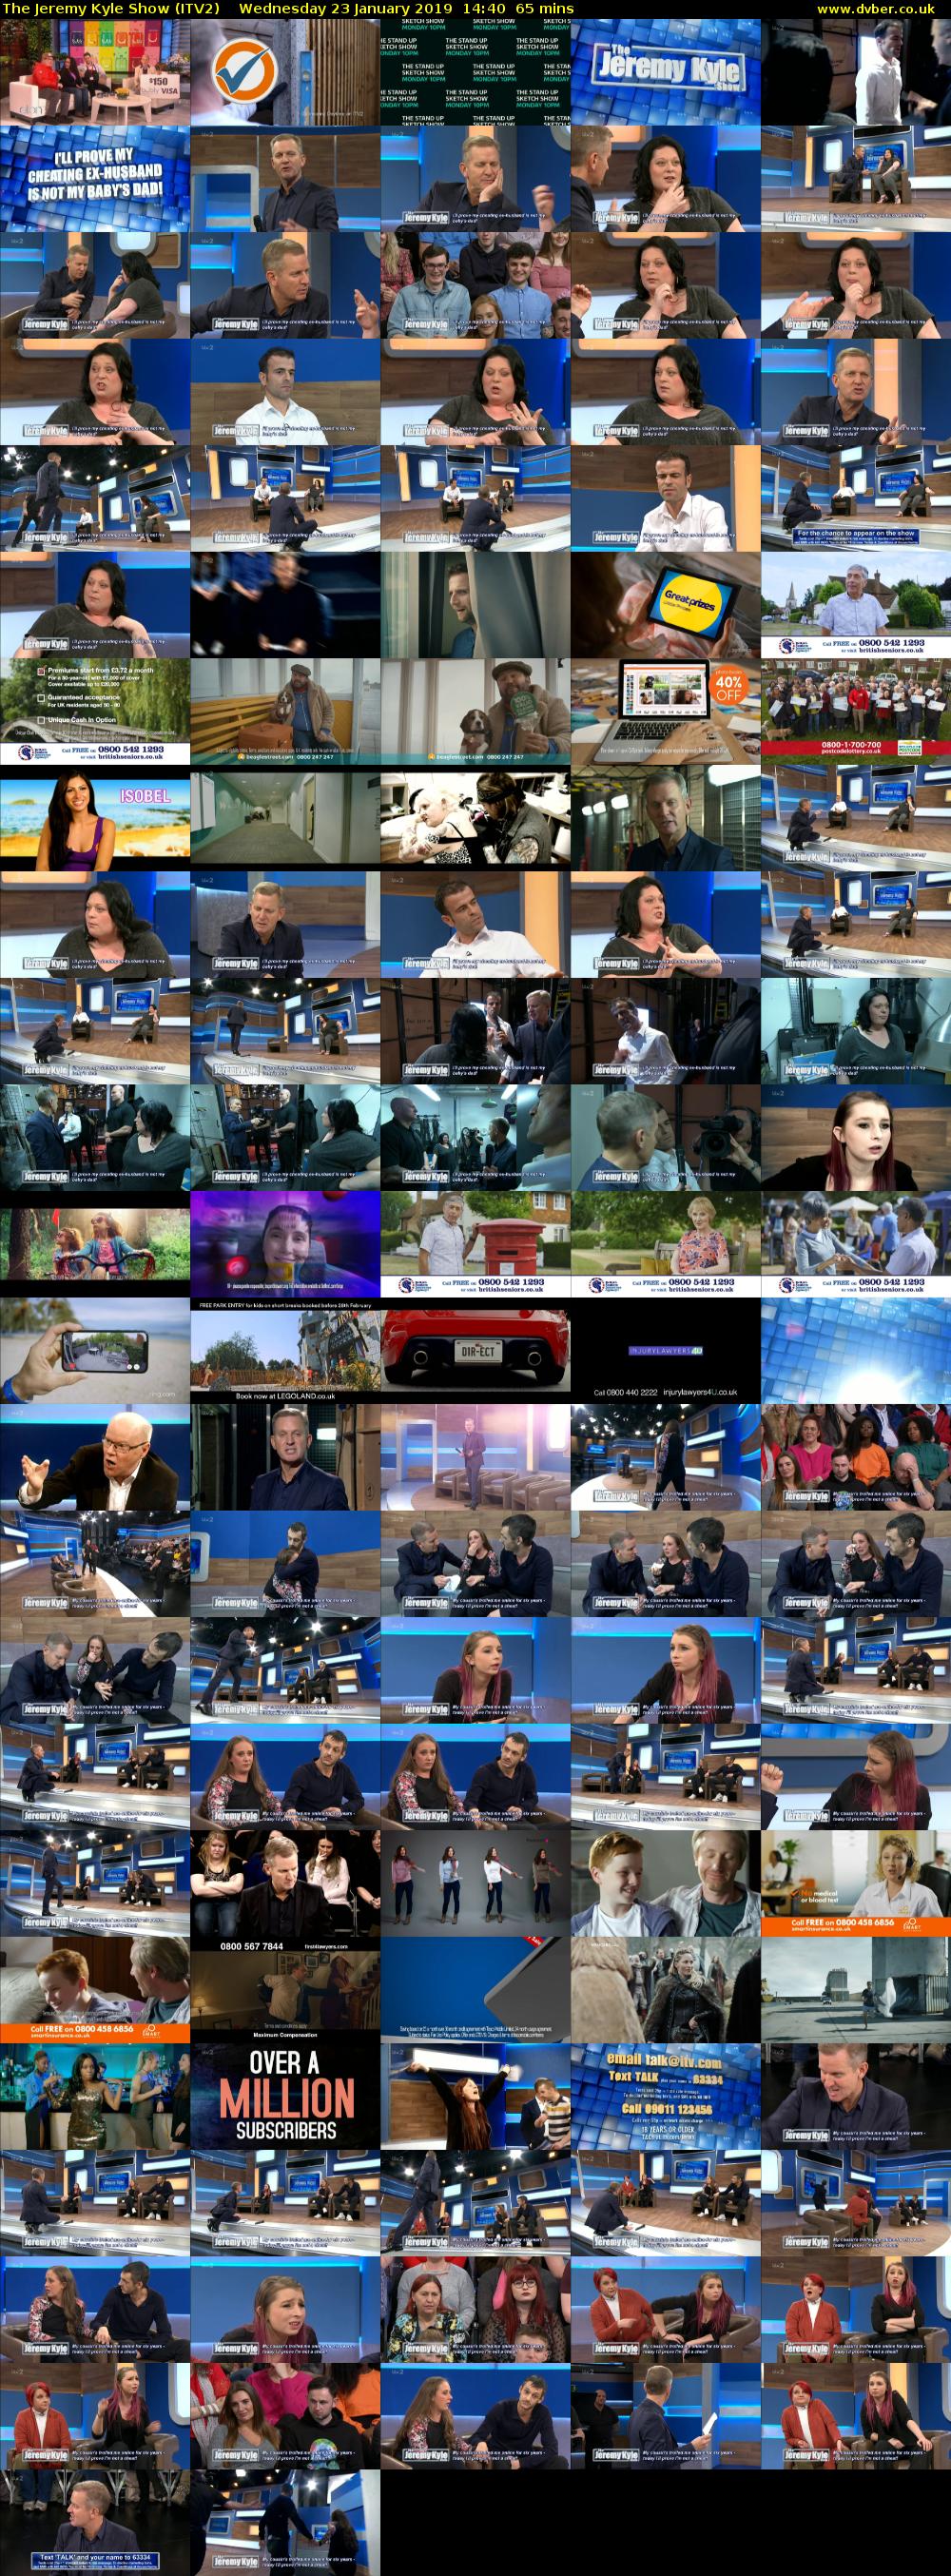 The Jeremy Kyle Show (ITV2) Wednesday 23 January 2019 14:40 - 15:45